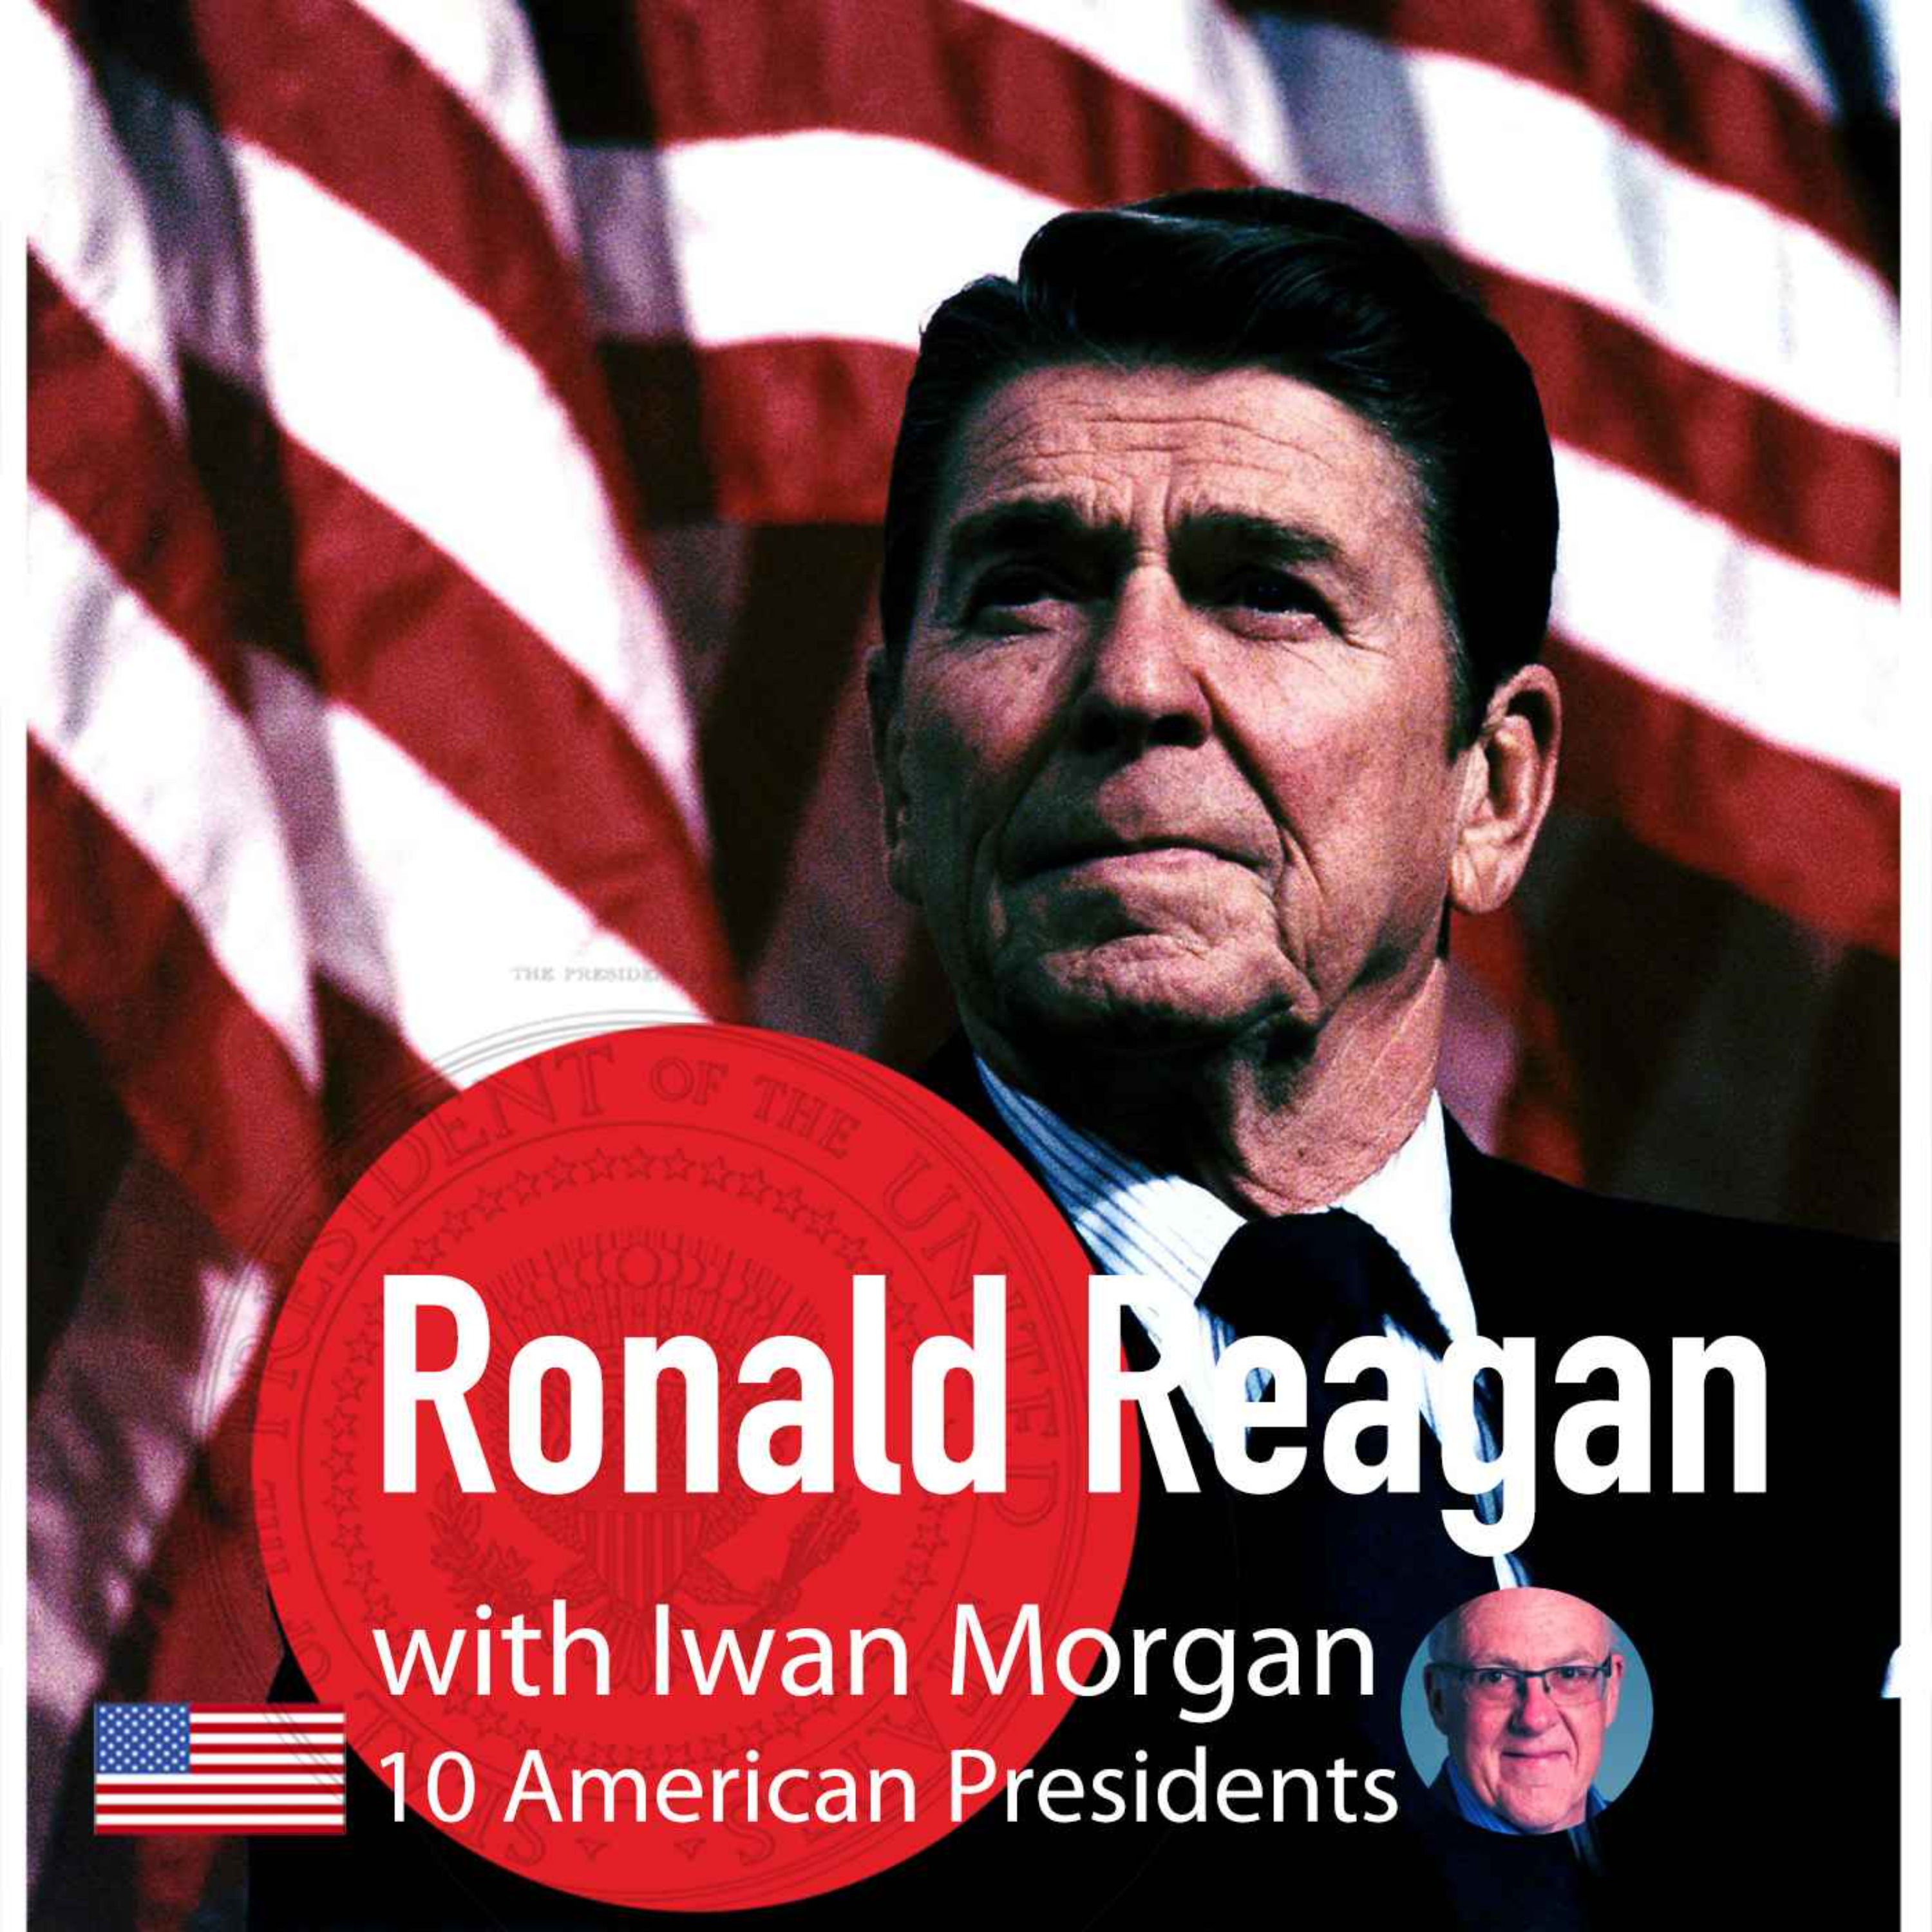 Tearing Down Walls: Reagan’s End Game